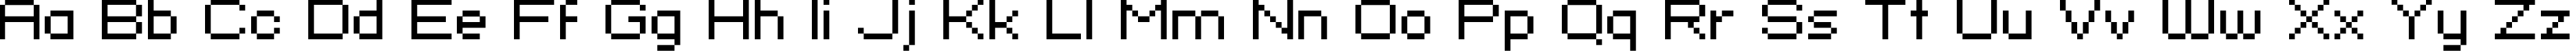 Пример написания английского алфавита шрифтом standard 07_51